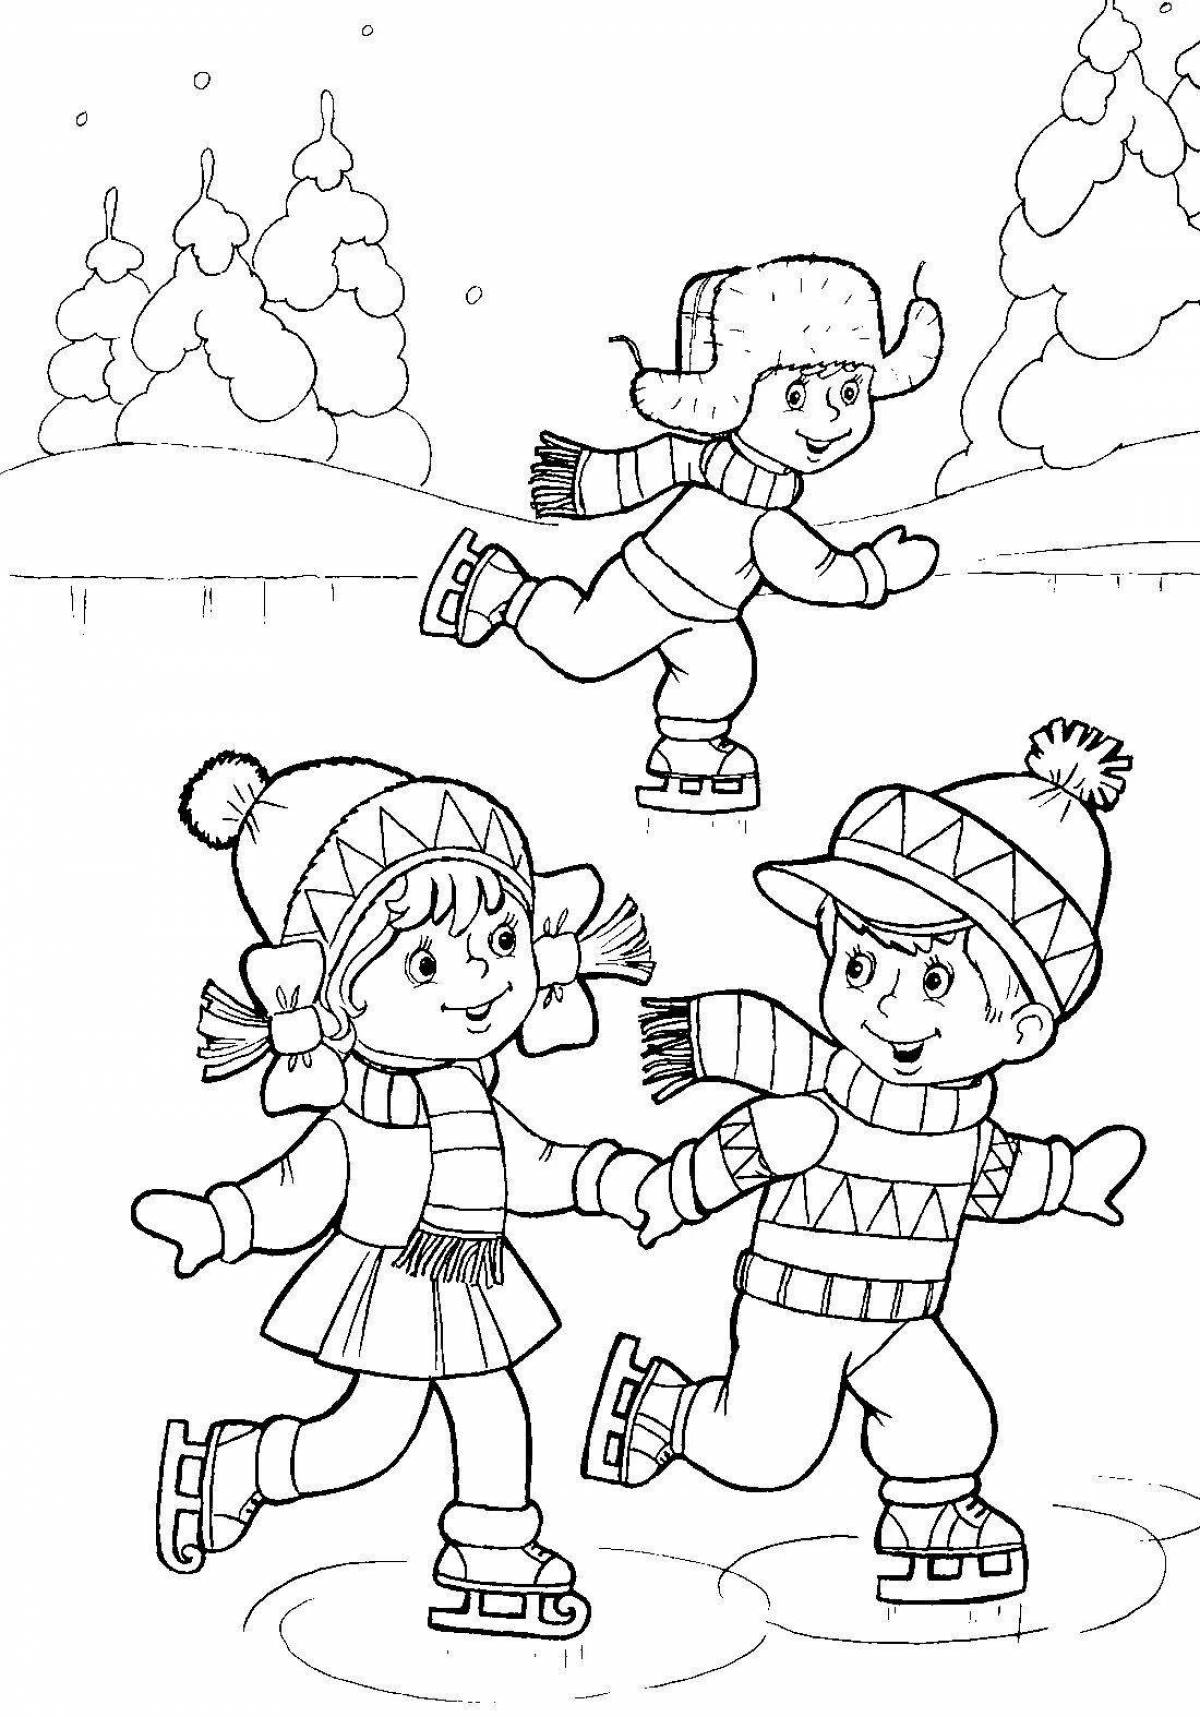 Joyful skating coloring pages for kids